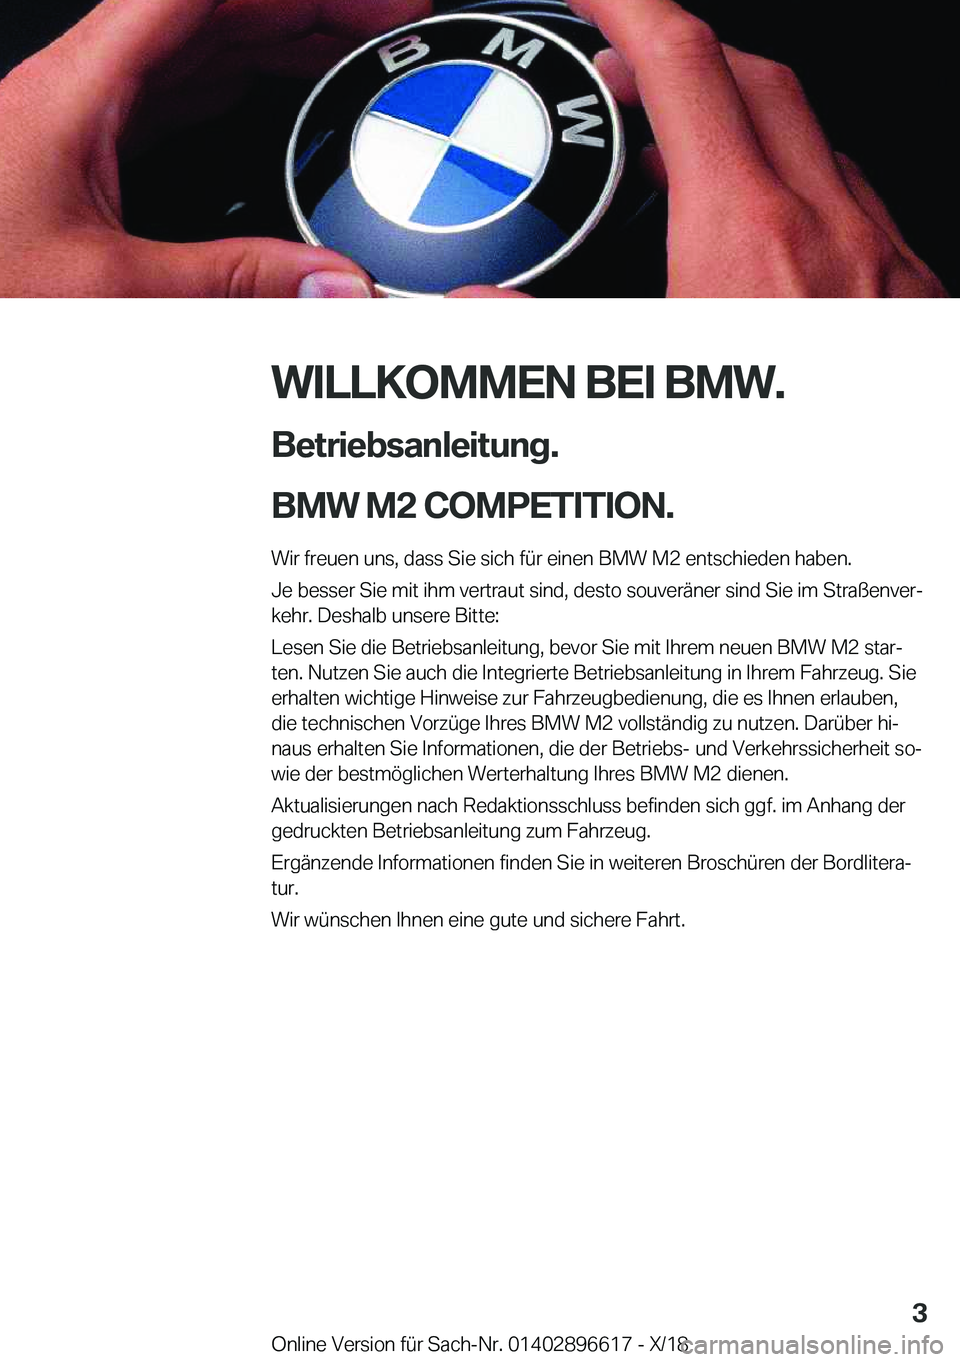 BMW M2 2019  Betriebsanleitungen (in German) �W�I�L�L�K�O�M�M�E�N��B�E�I��B�M�W�.�B�e�t�r�i�e�b�s�a�n�l�e�i�t�u�n�g�.
�B�M�W��M�2��C�O�M�P�E�T�I�T�I�O�N�.� �W�i�r��f�r�e�u�e�n��u�n�s�,��d�a�s�s��S�i�e��s�i�c�h��f�